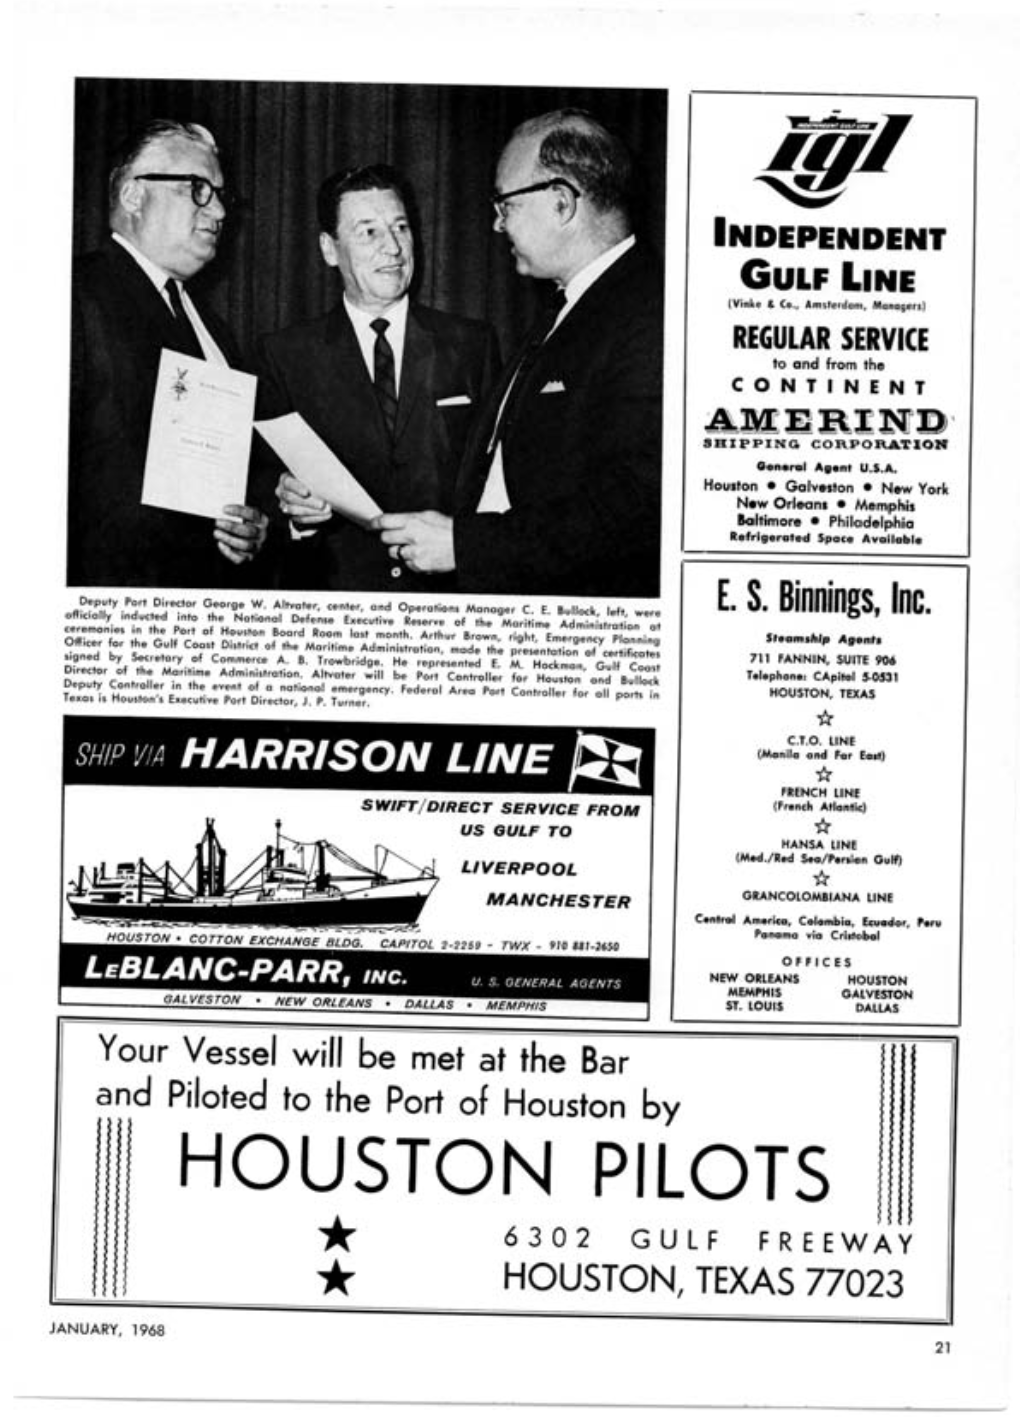 Houston Pilots 6302 Gulf Freeway Houston,Texas 77023